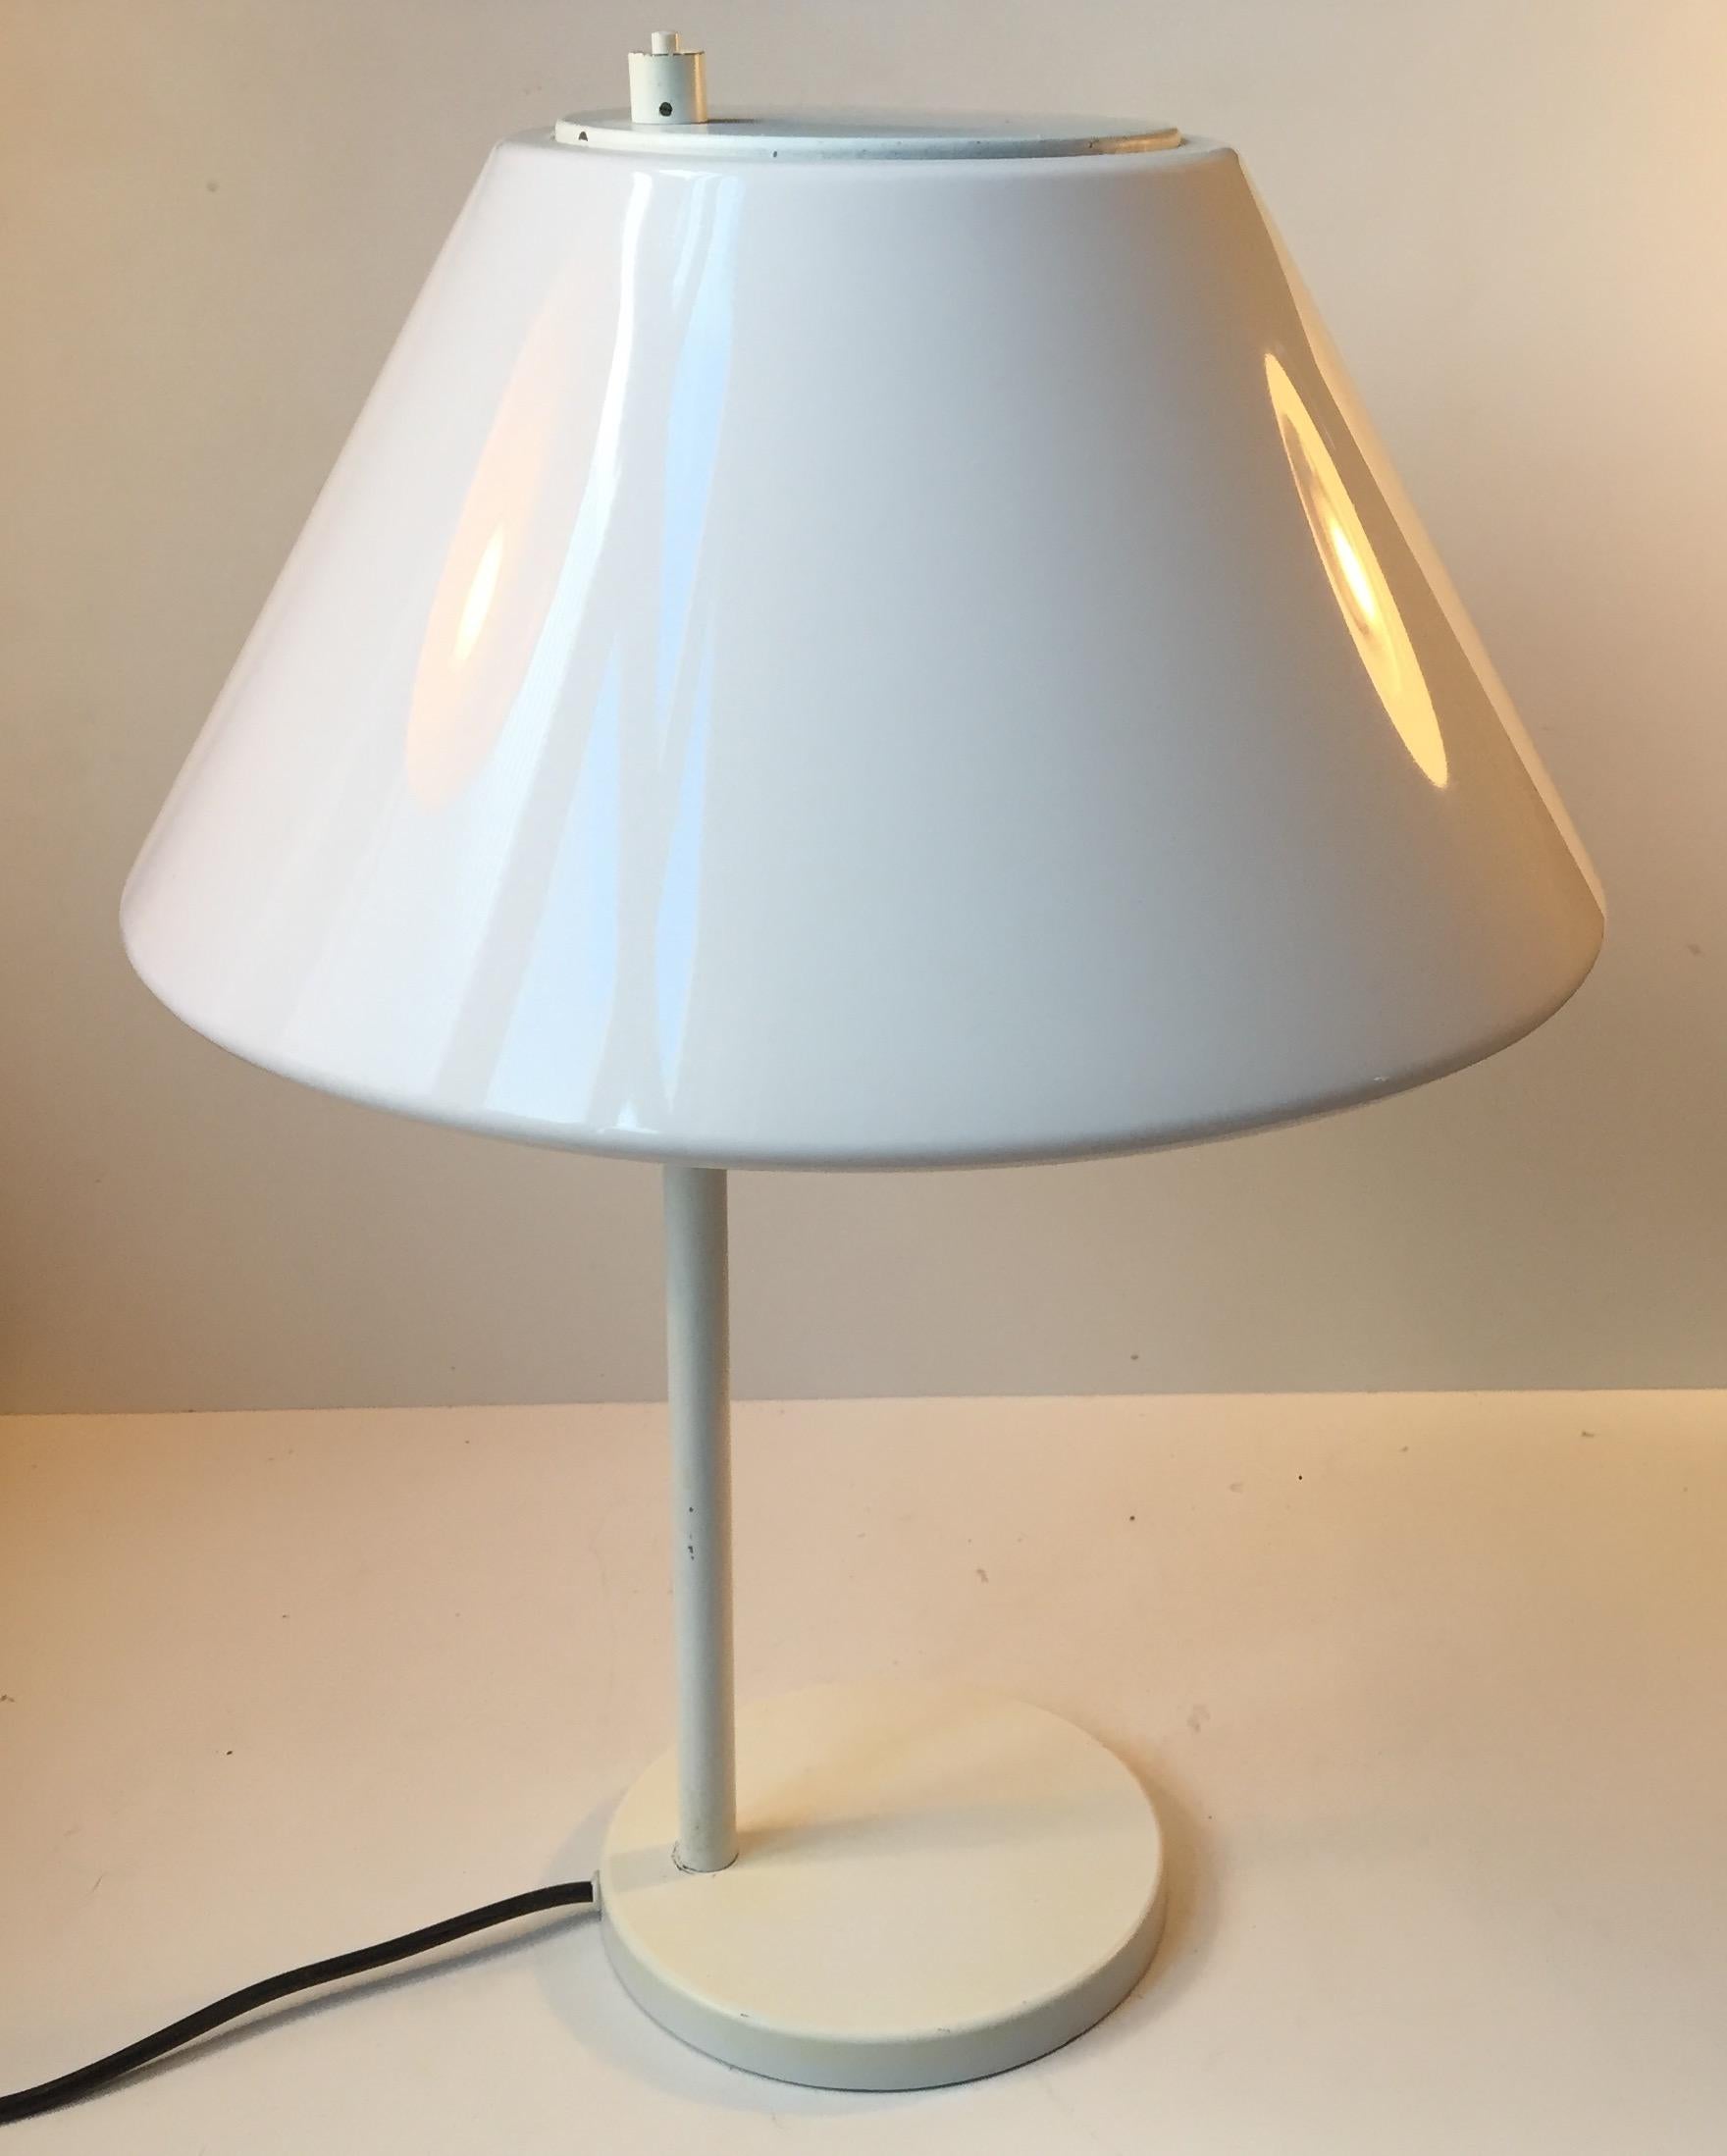 Powder-Coated Louis Poulsen Scandinavian White Minimalist Table Lamps, 1970s For Sale